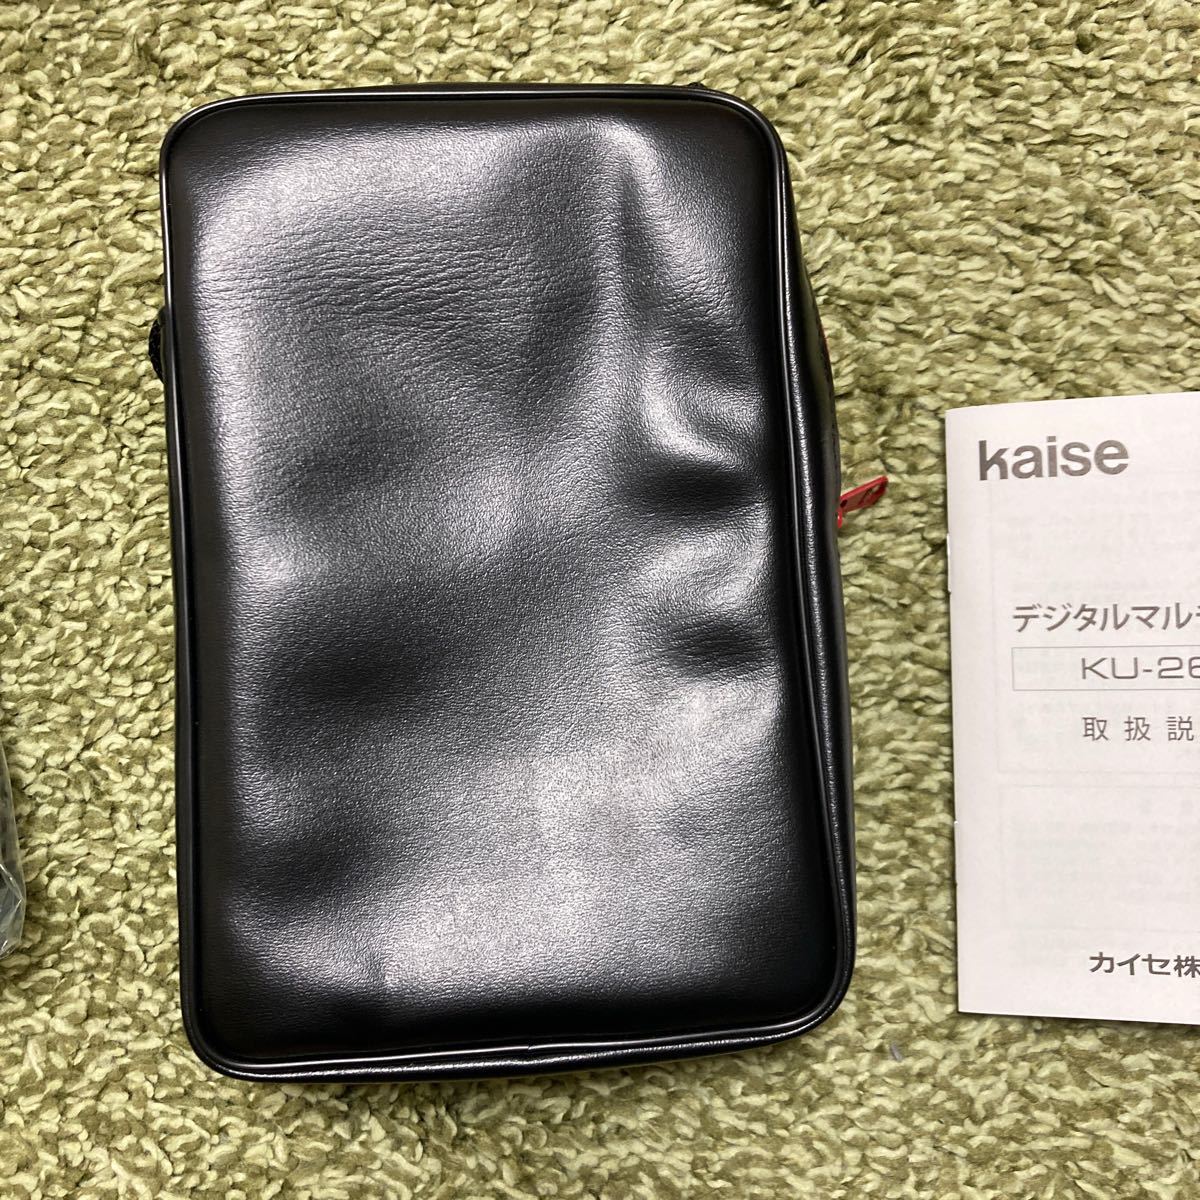 kaise デジタルマルチメーター KU-2600 新品未使用品_画像4